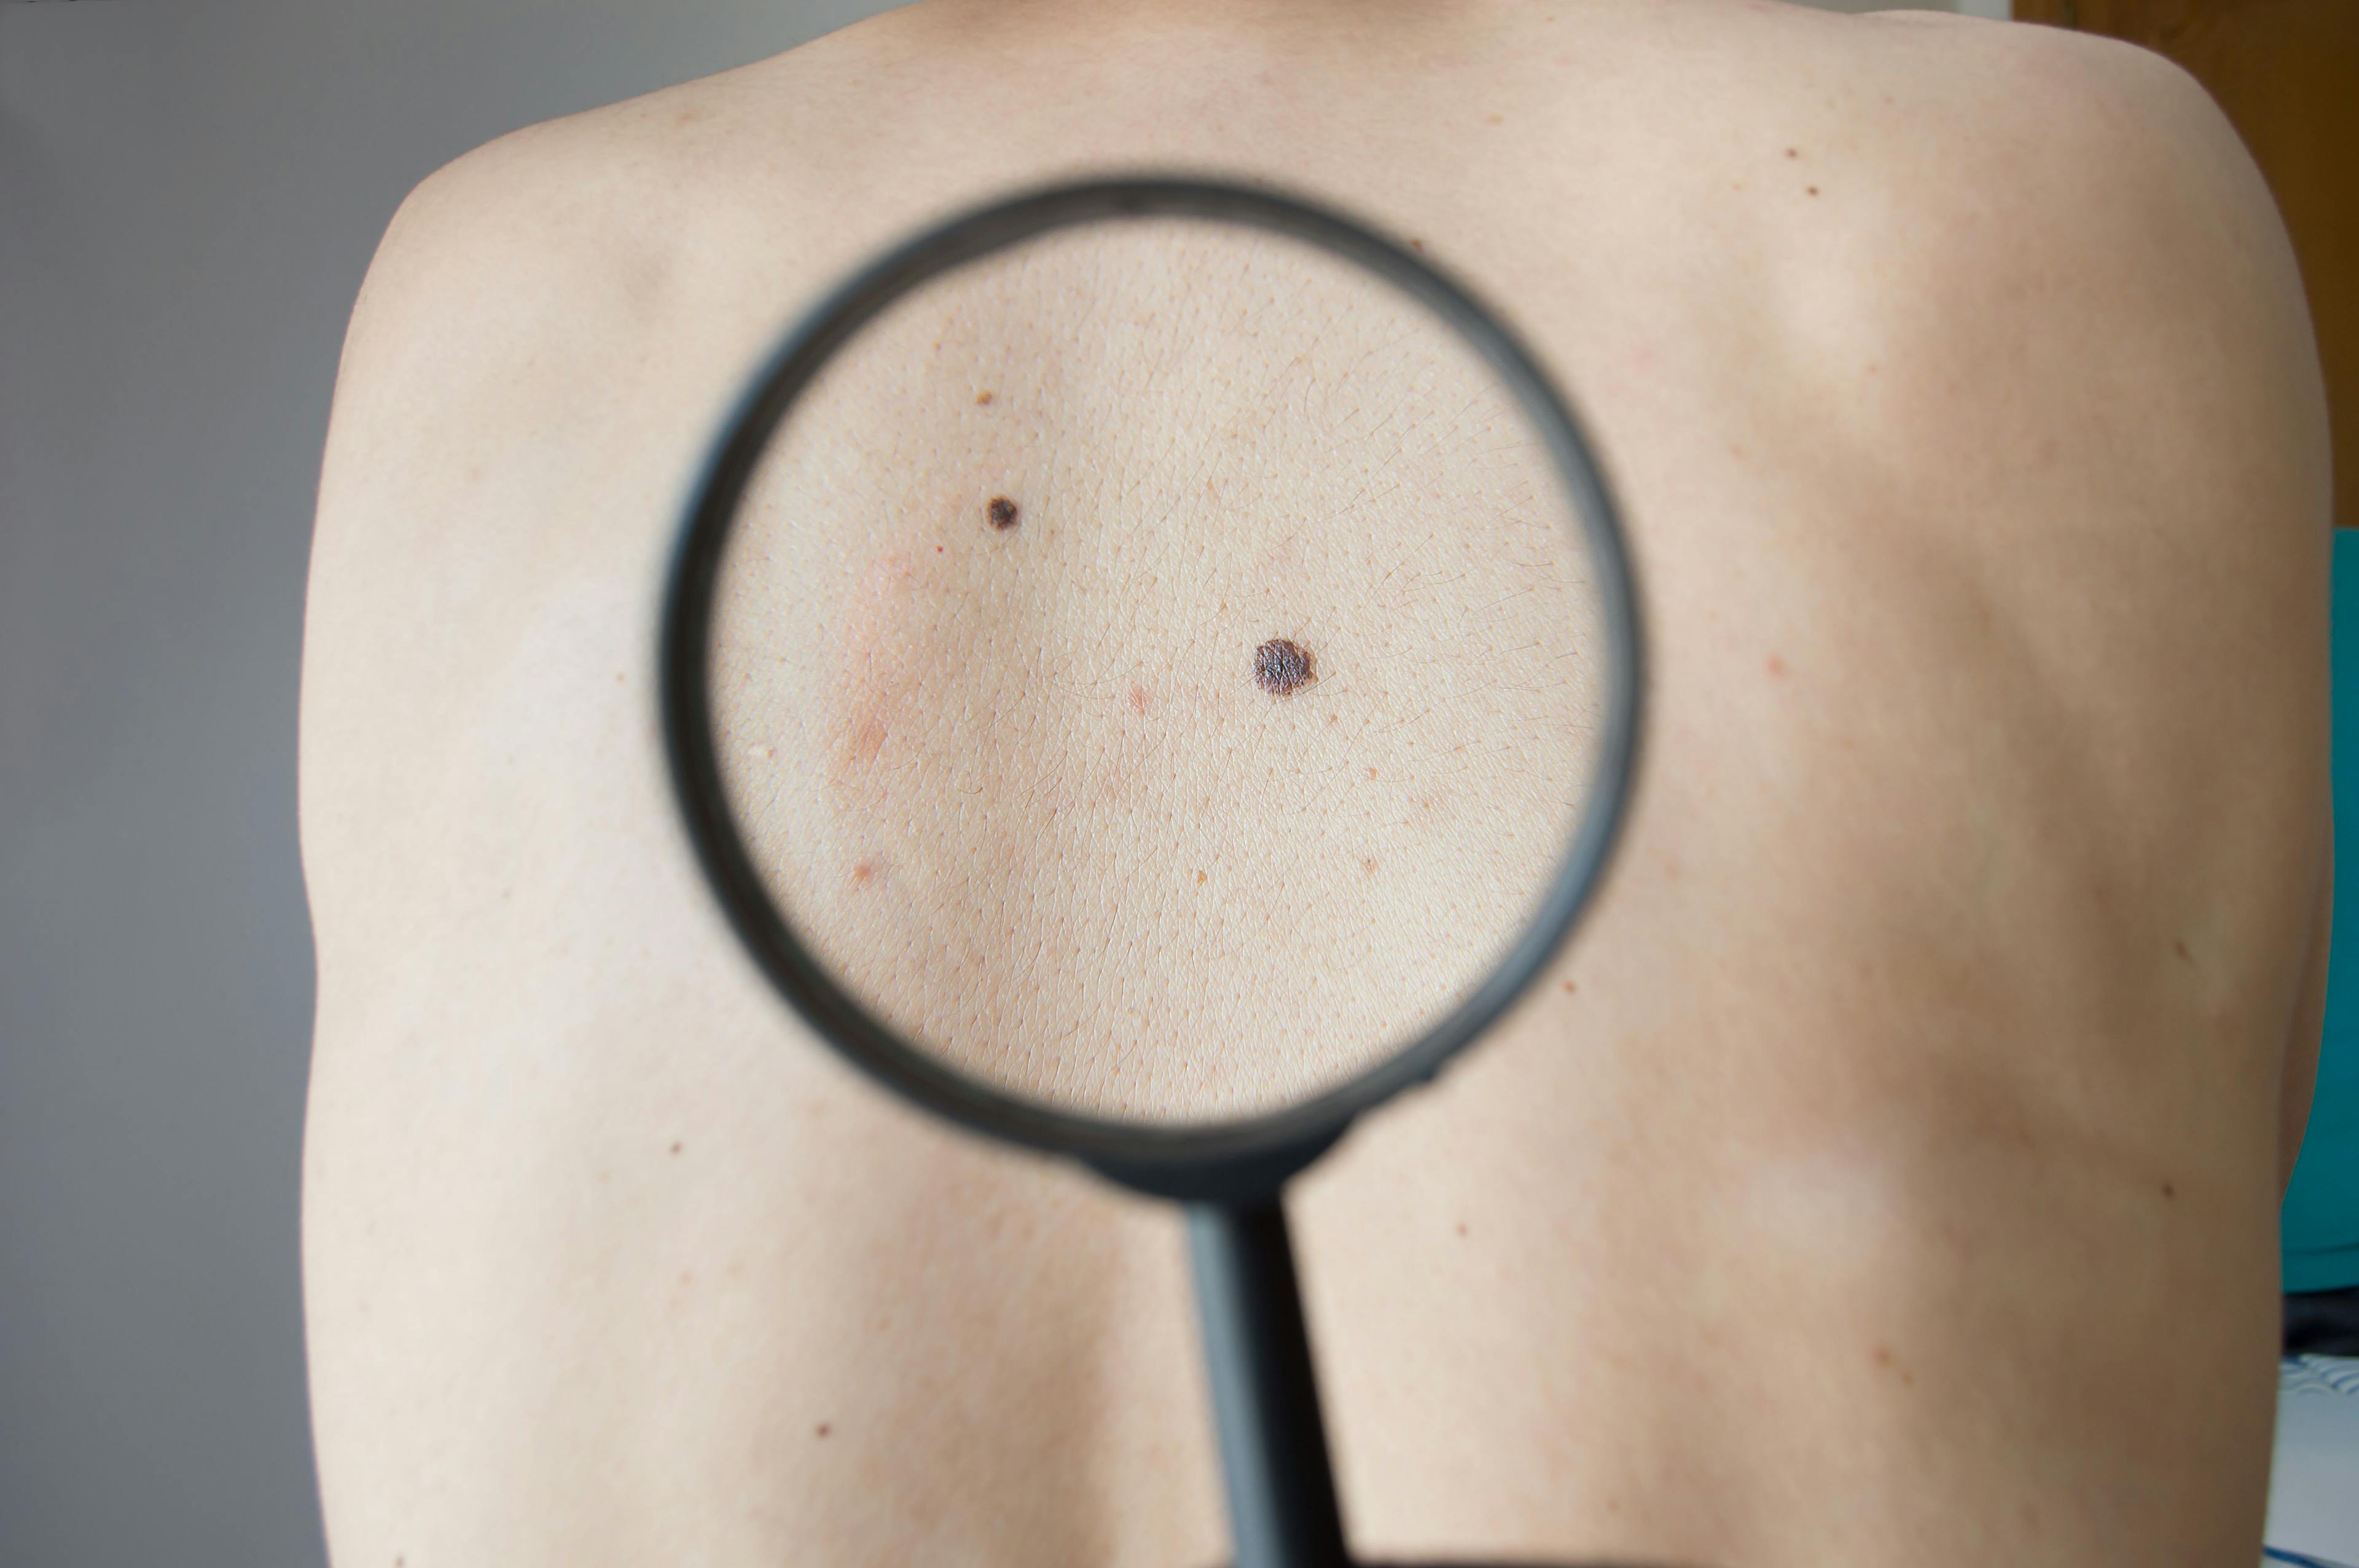 Skin Check for Melanoma | image credit: cunaplus - stock.adobe.com